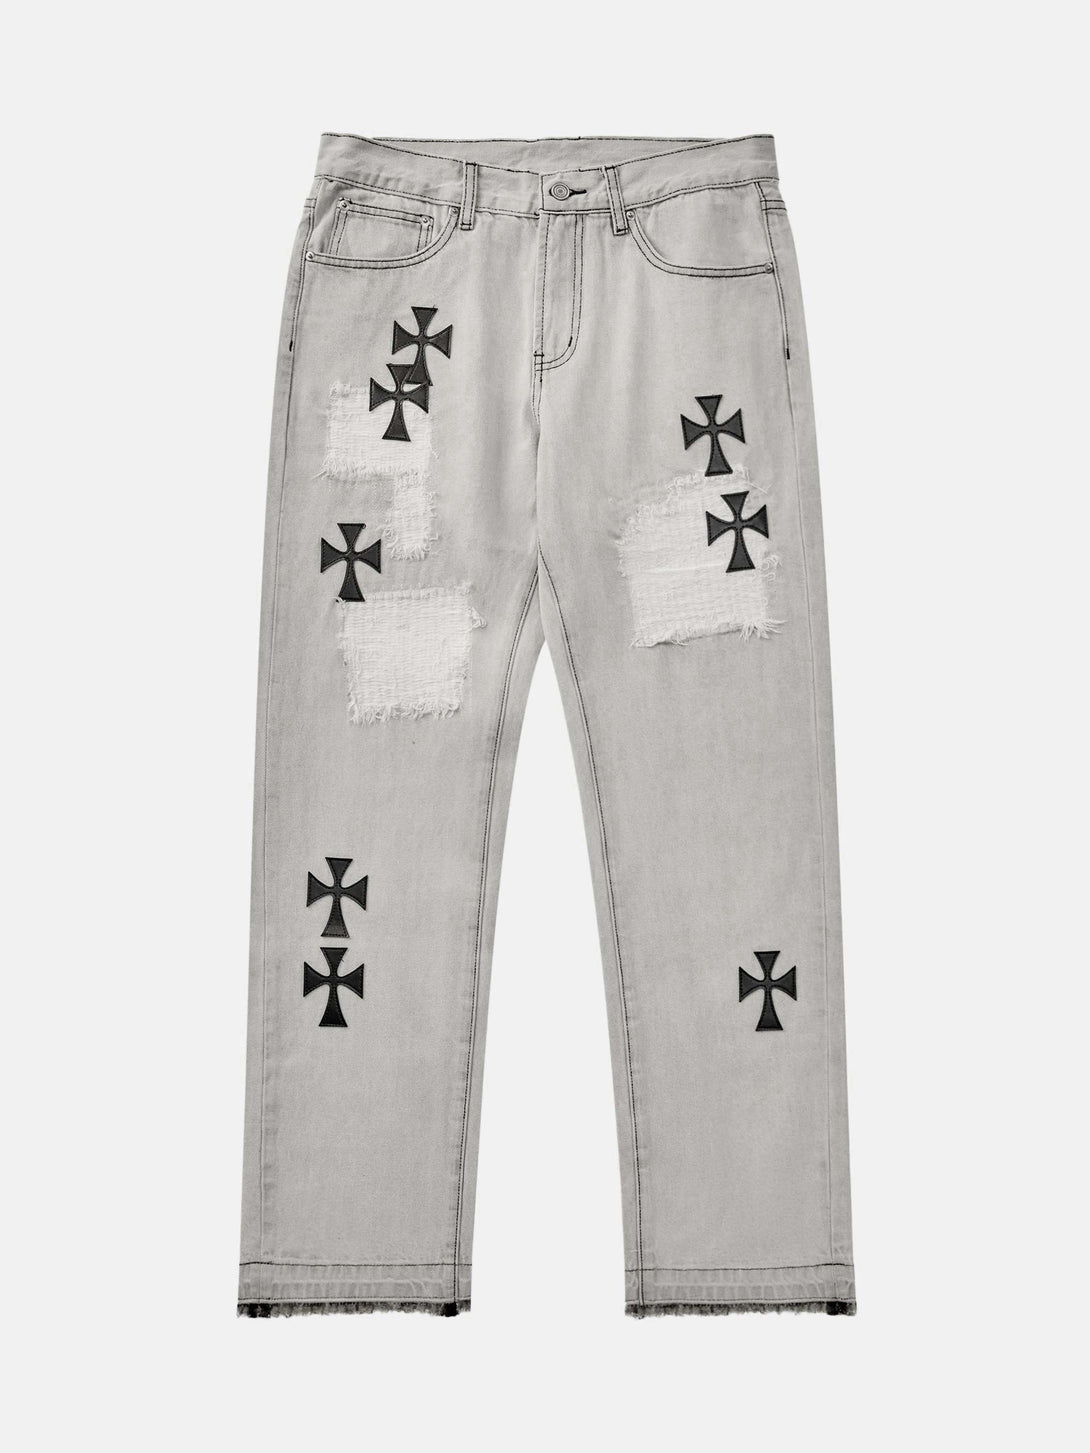 Majesda® - American Vintage Jeans - 1930- Outfit Ideas - Streetwear Fashion - majesda.com